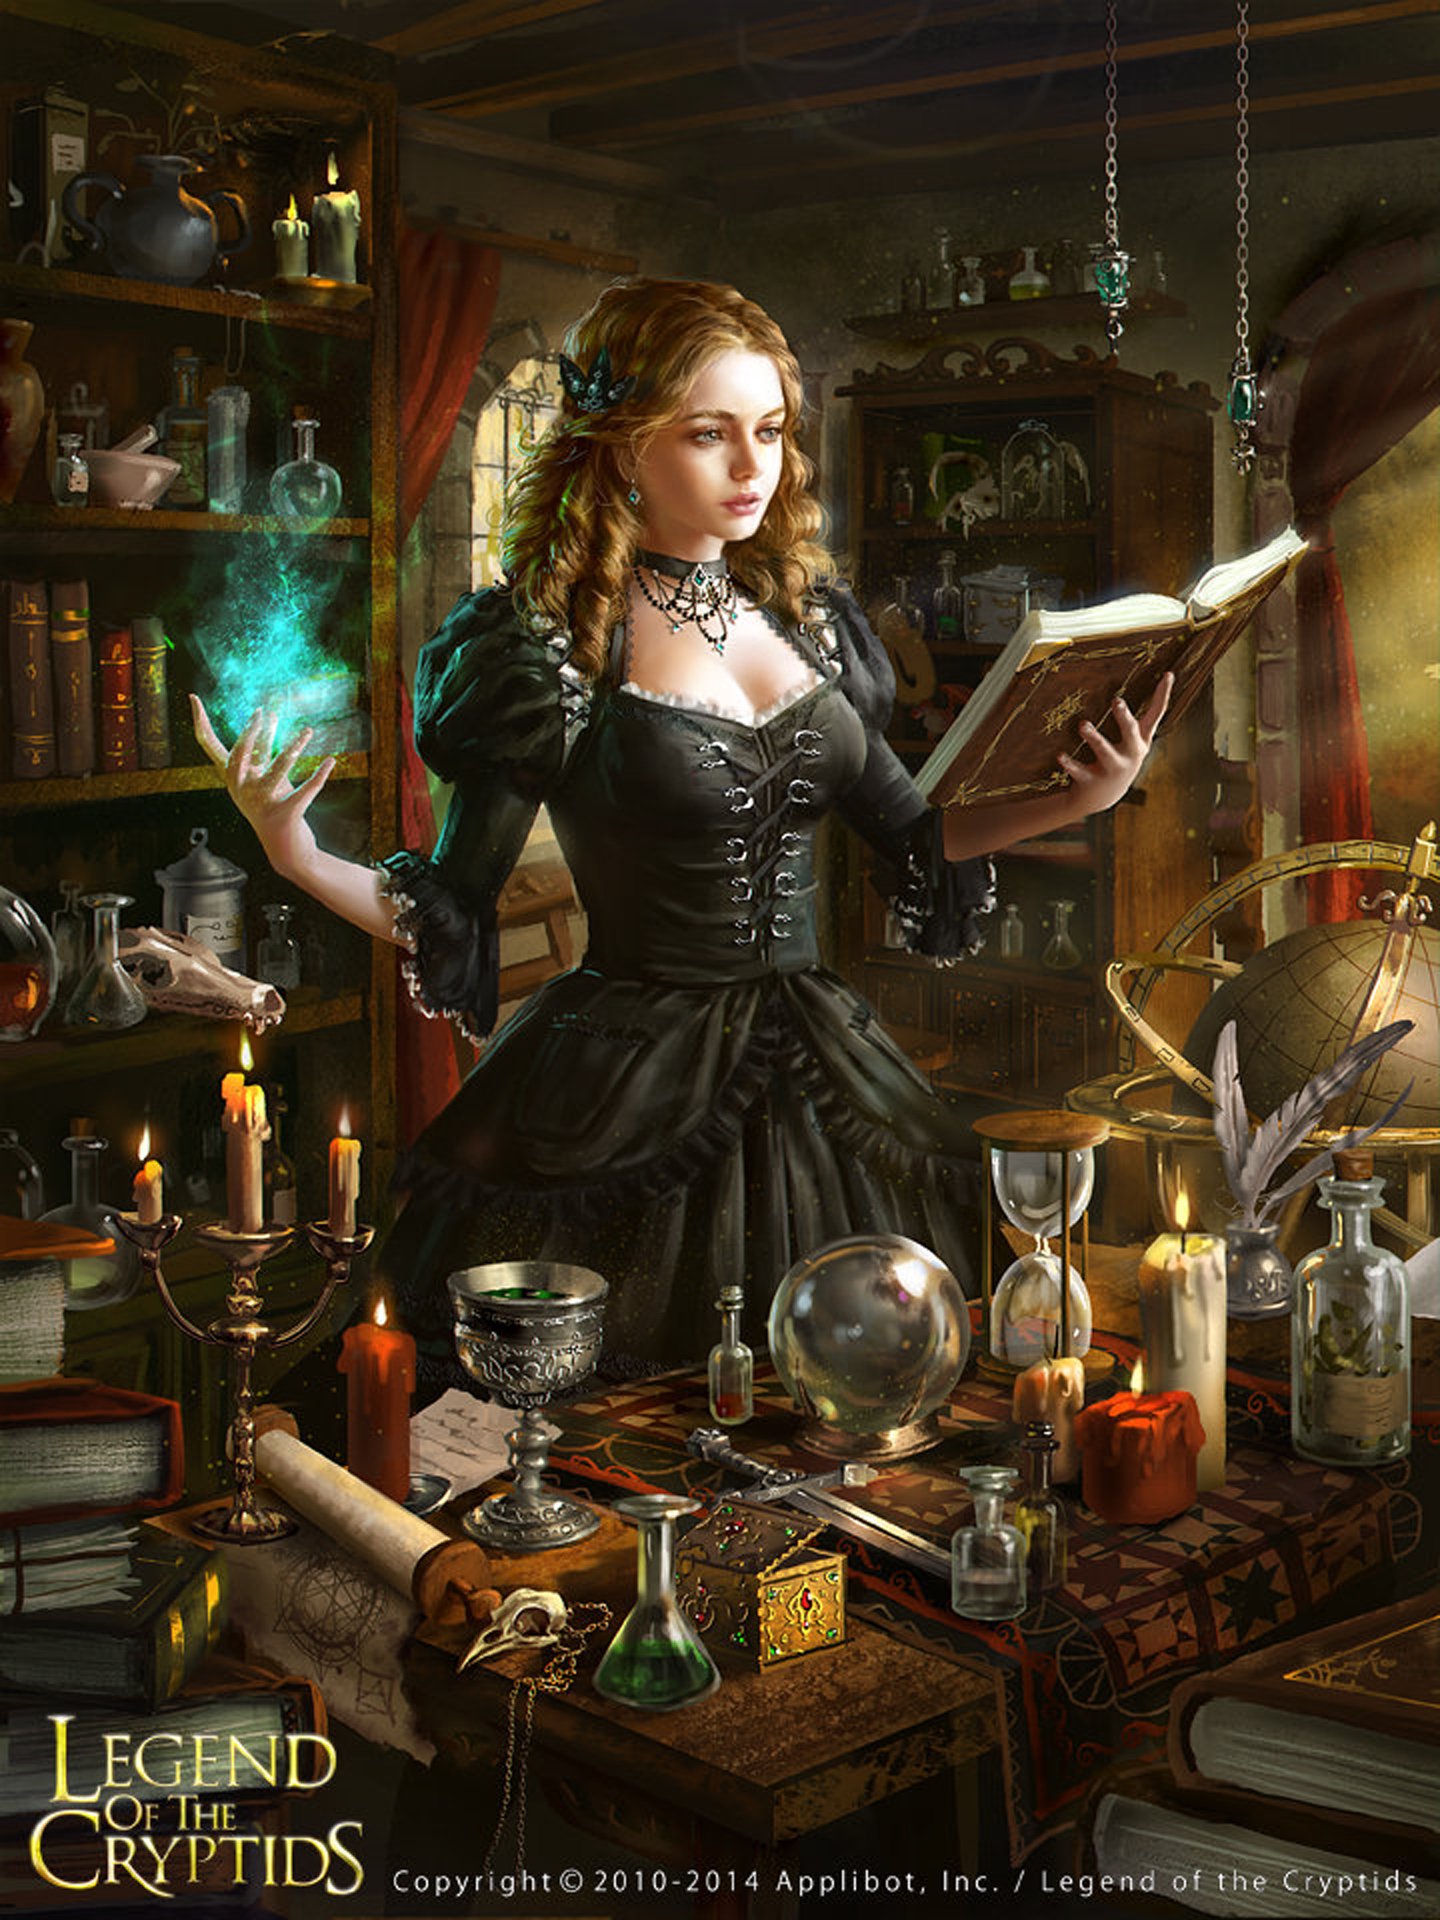  magic book games girl dress long hair cryptids wallpaper background